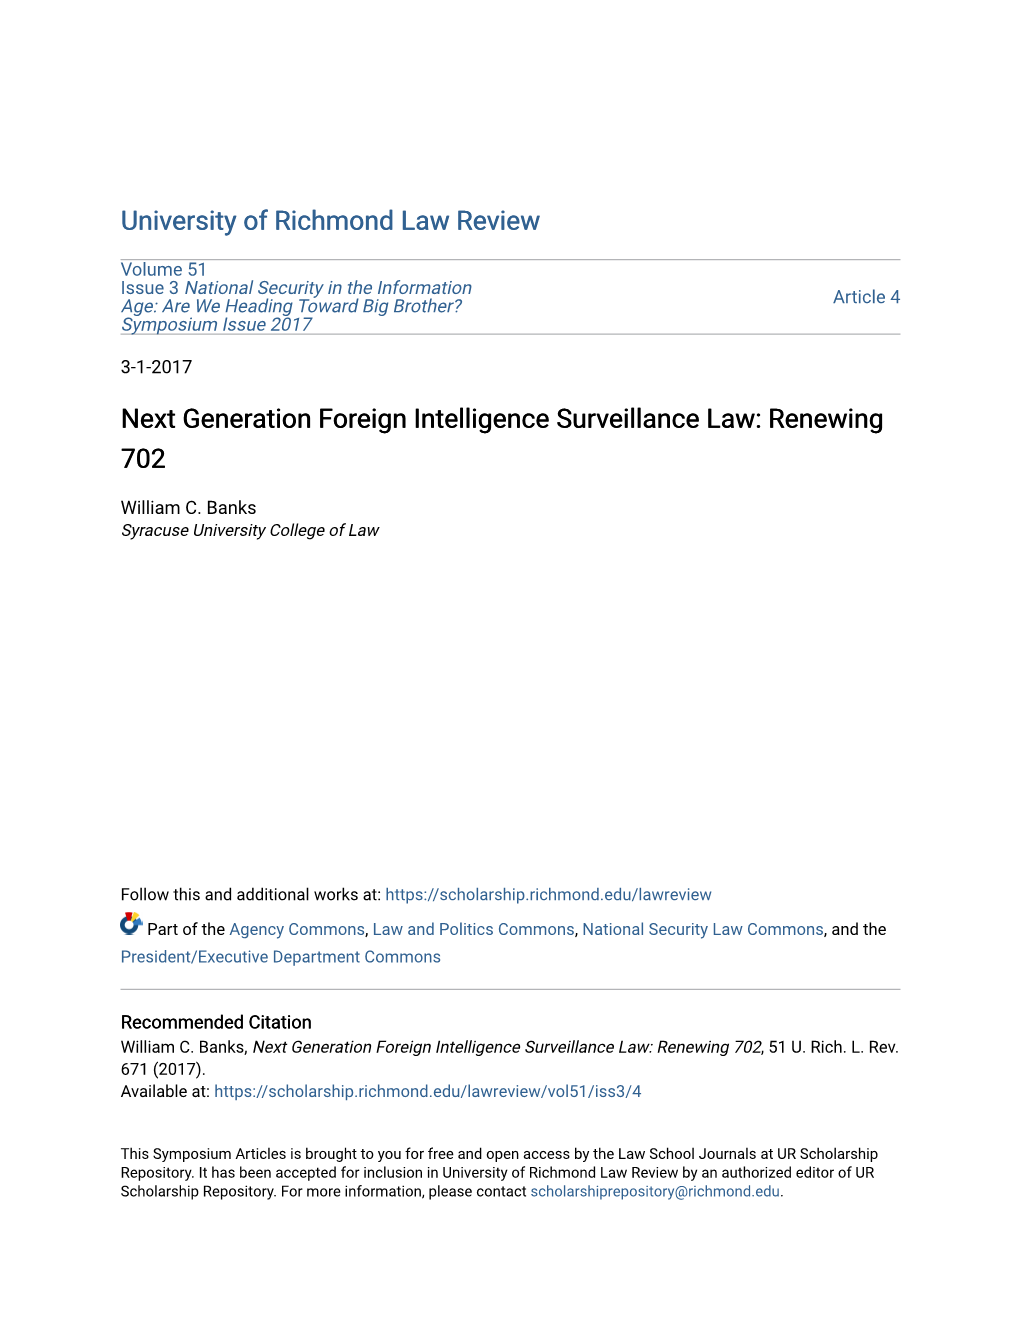 Next Generation Foreign Intelligence Surveillance Law: Renewing 702